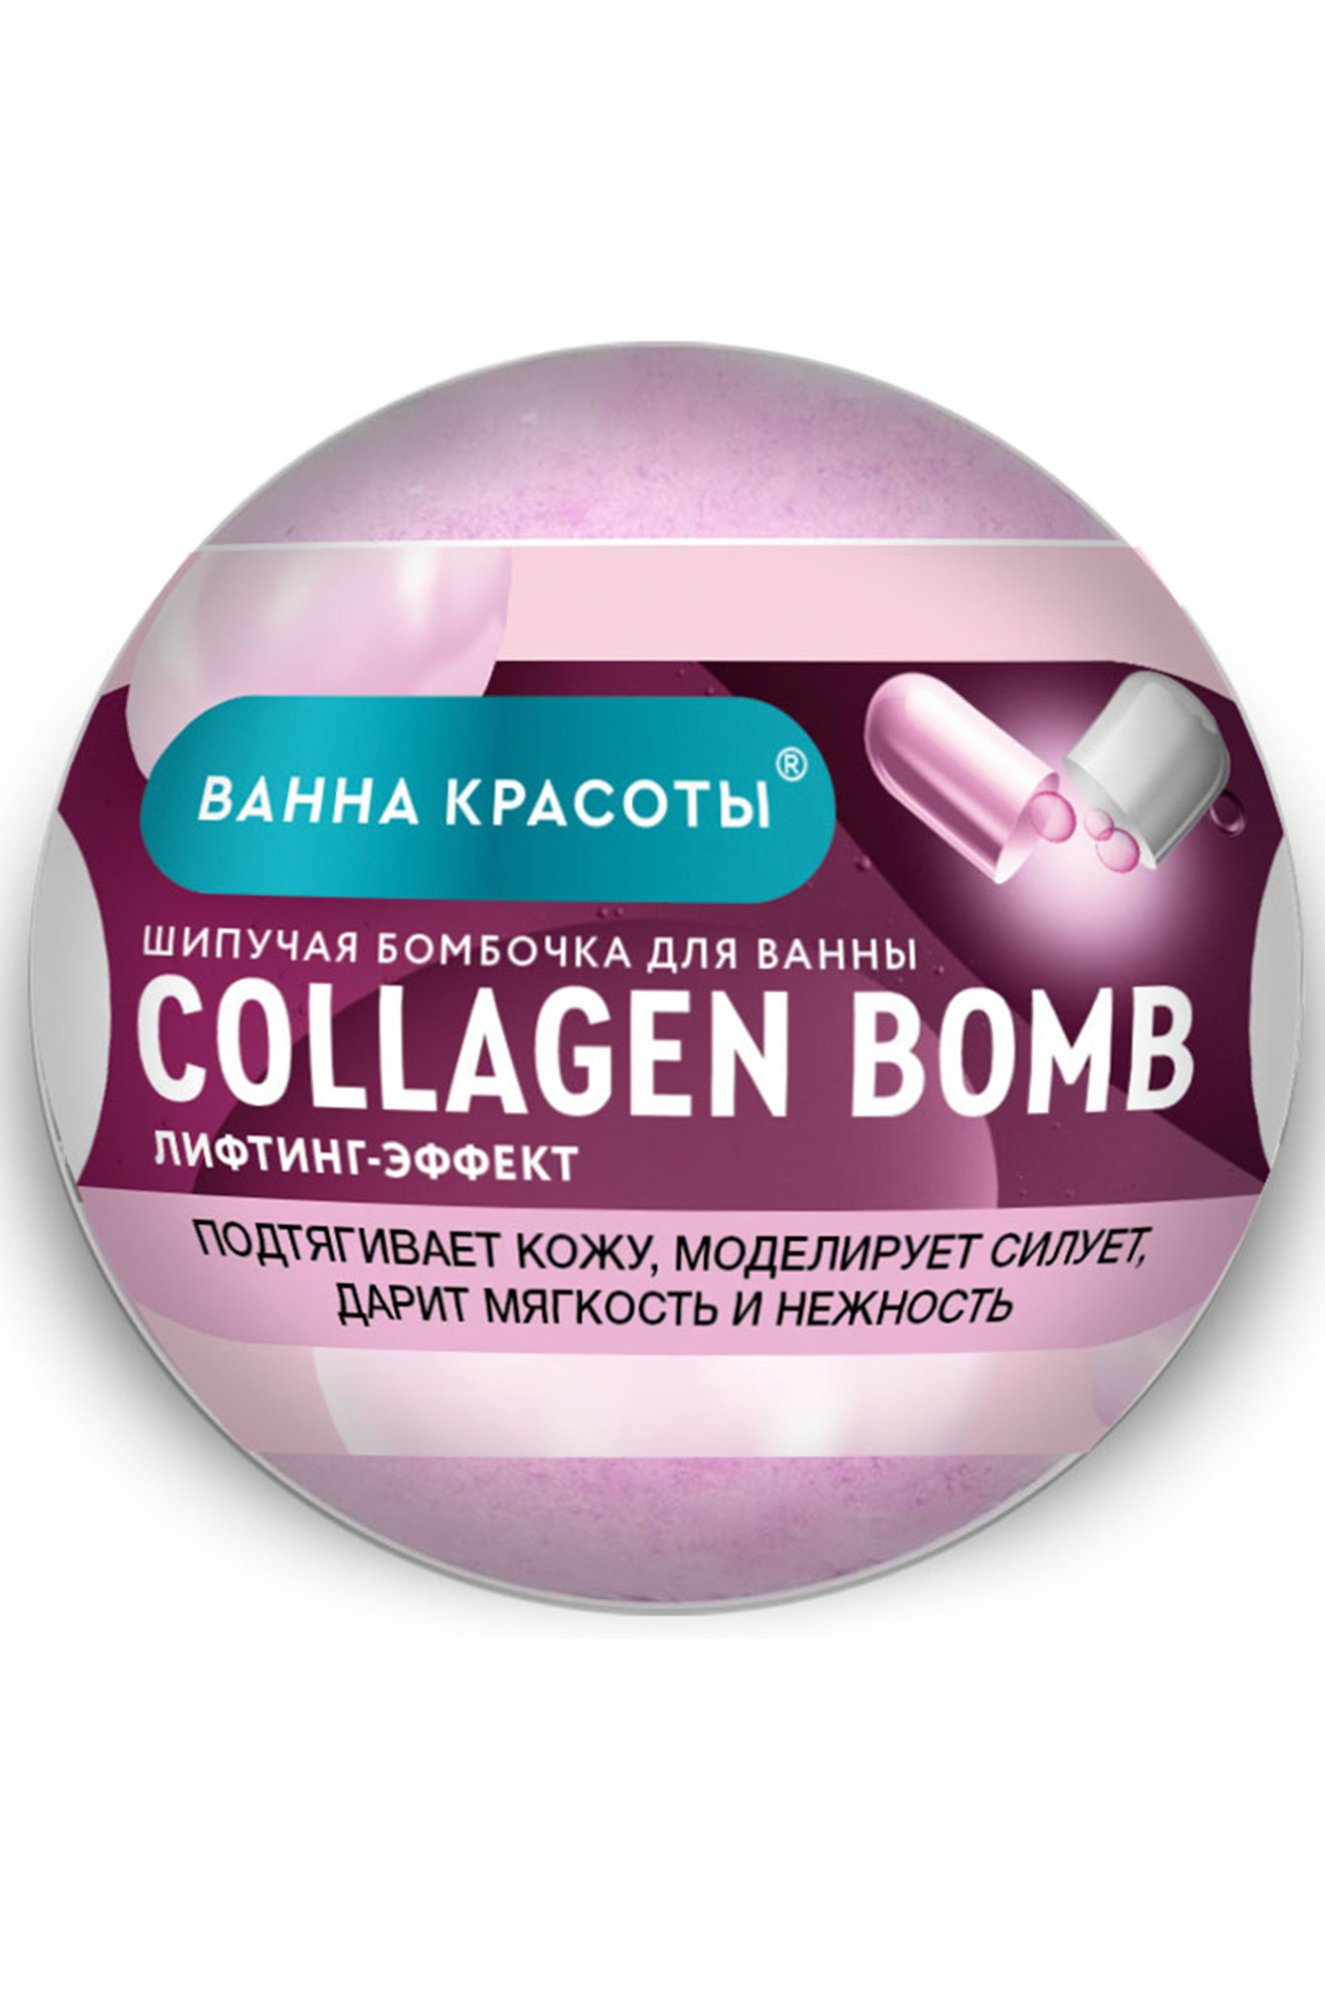 Шипучая бомбочка для ванны COLLAGEN BOMB 110 гр Fito косметик